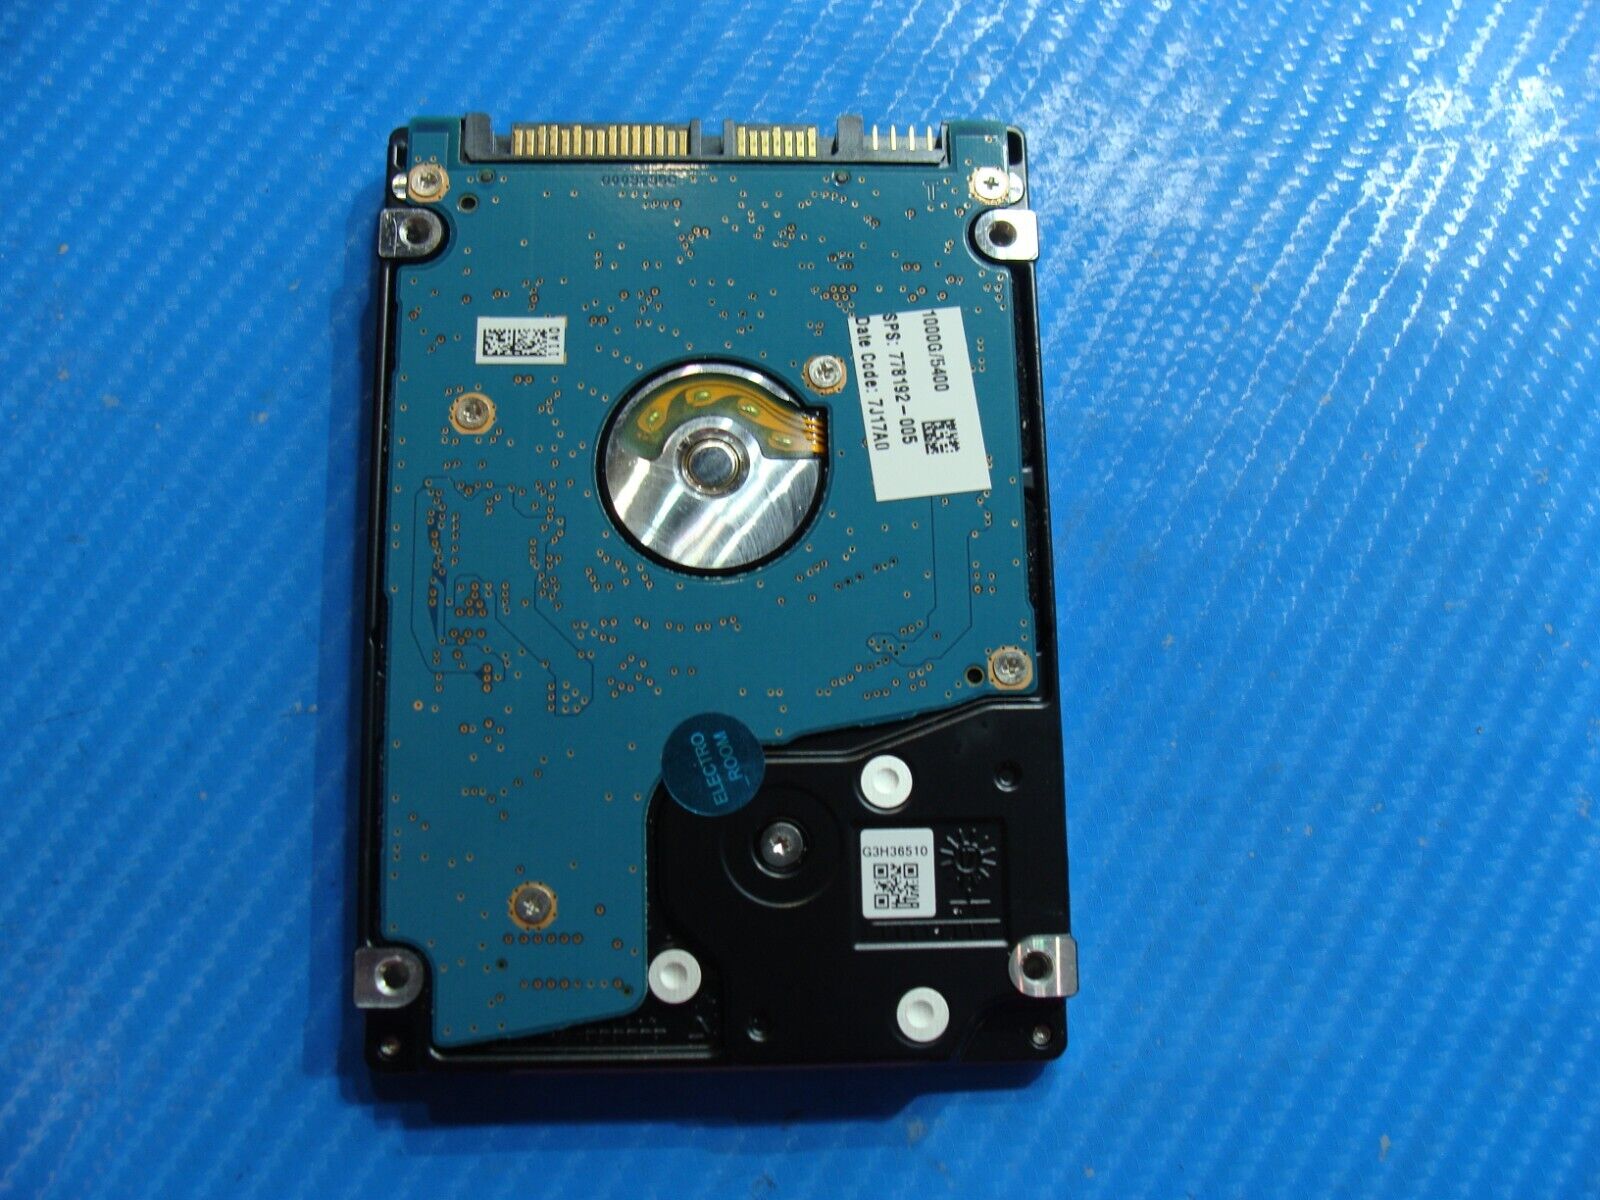 HP 15-bs013dx Toshiba 1TB SATA 2.5